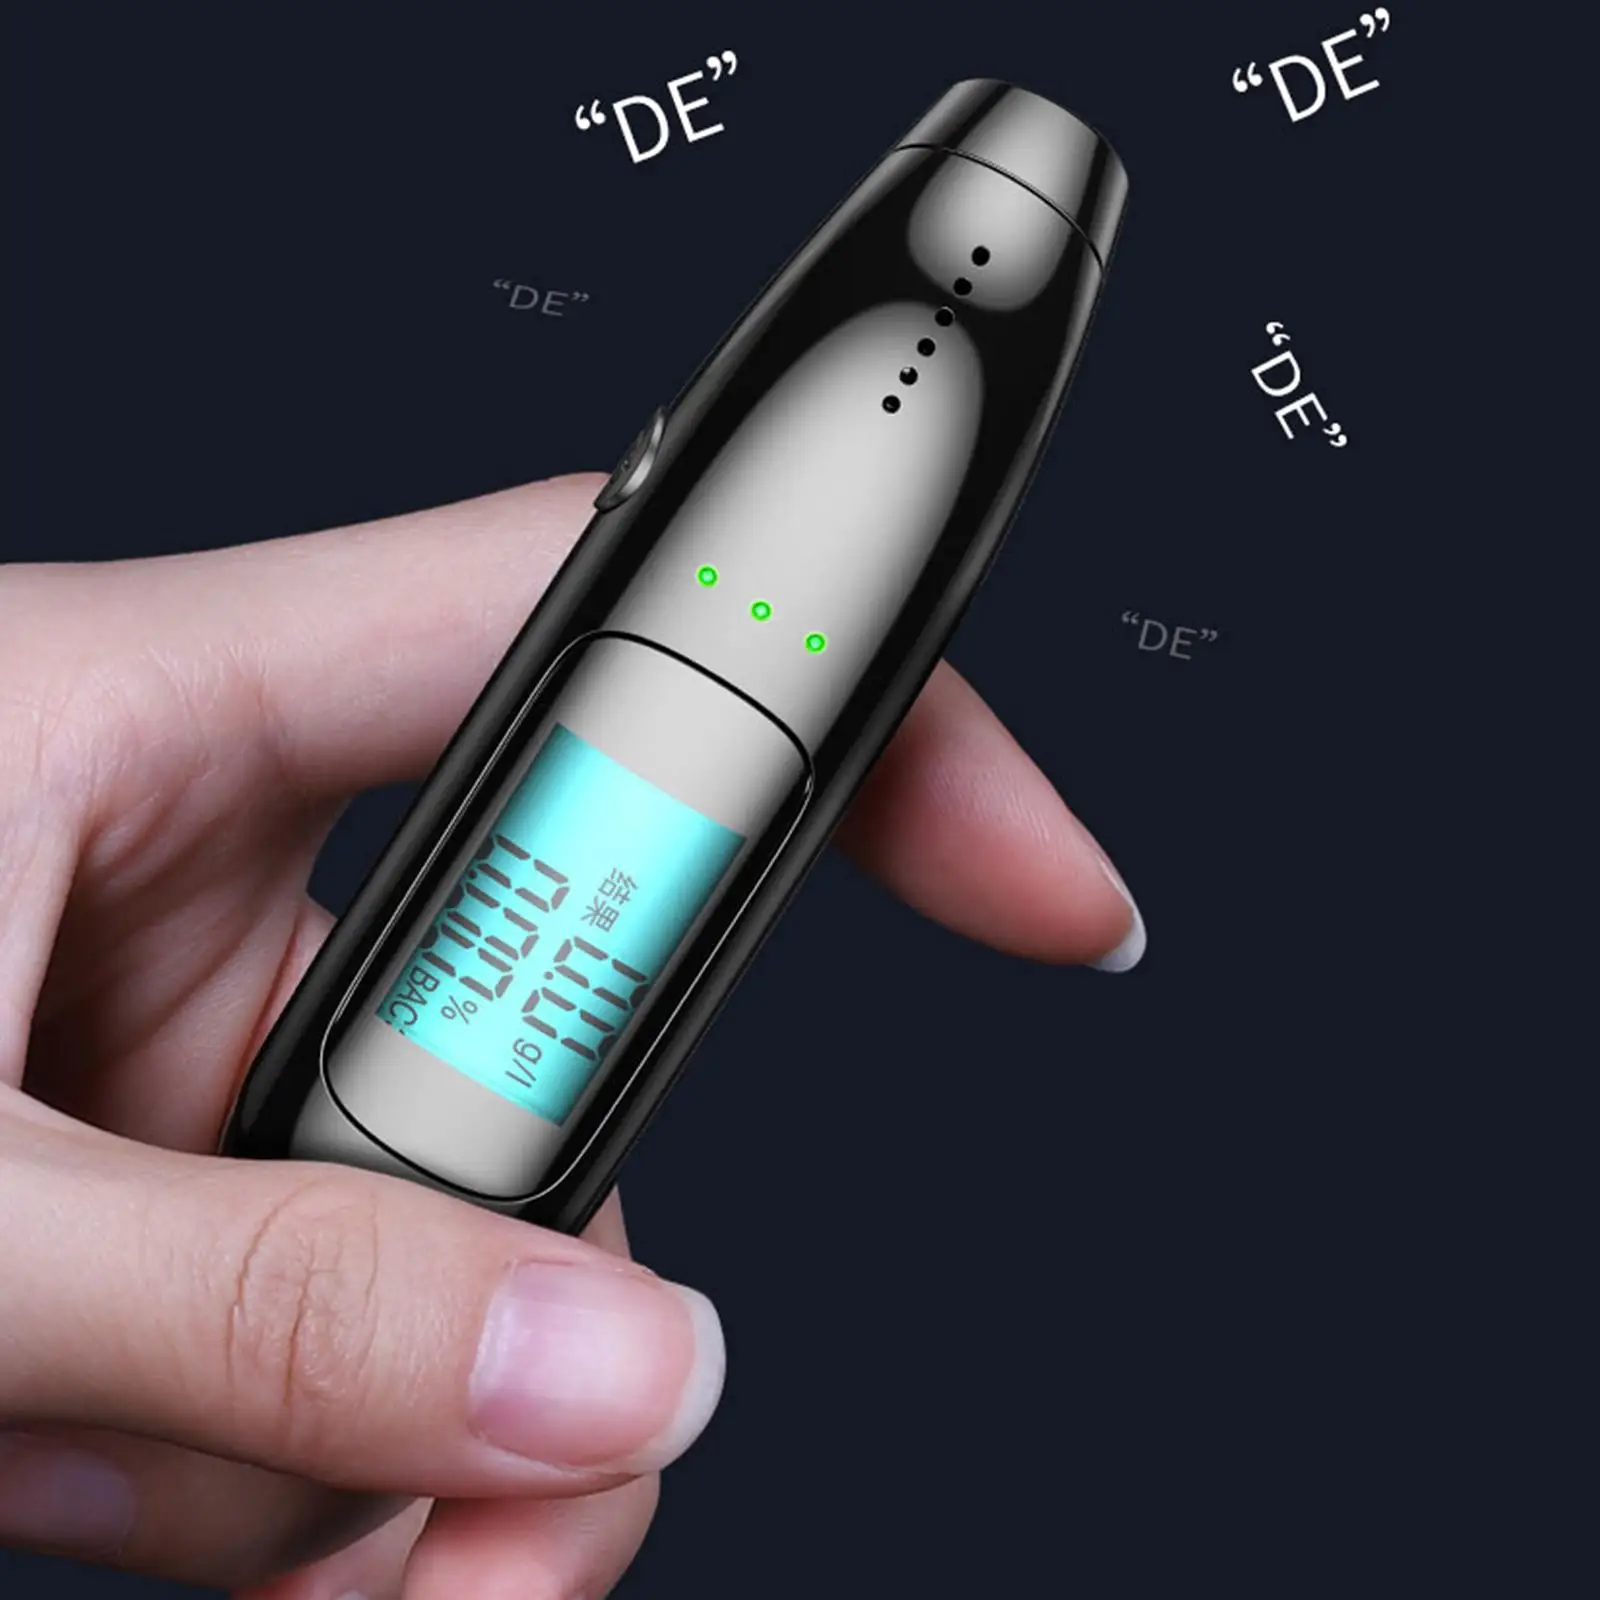 Mini LCD Digital Breath Alcohol Tester Handheld for Drivers Men Women Home